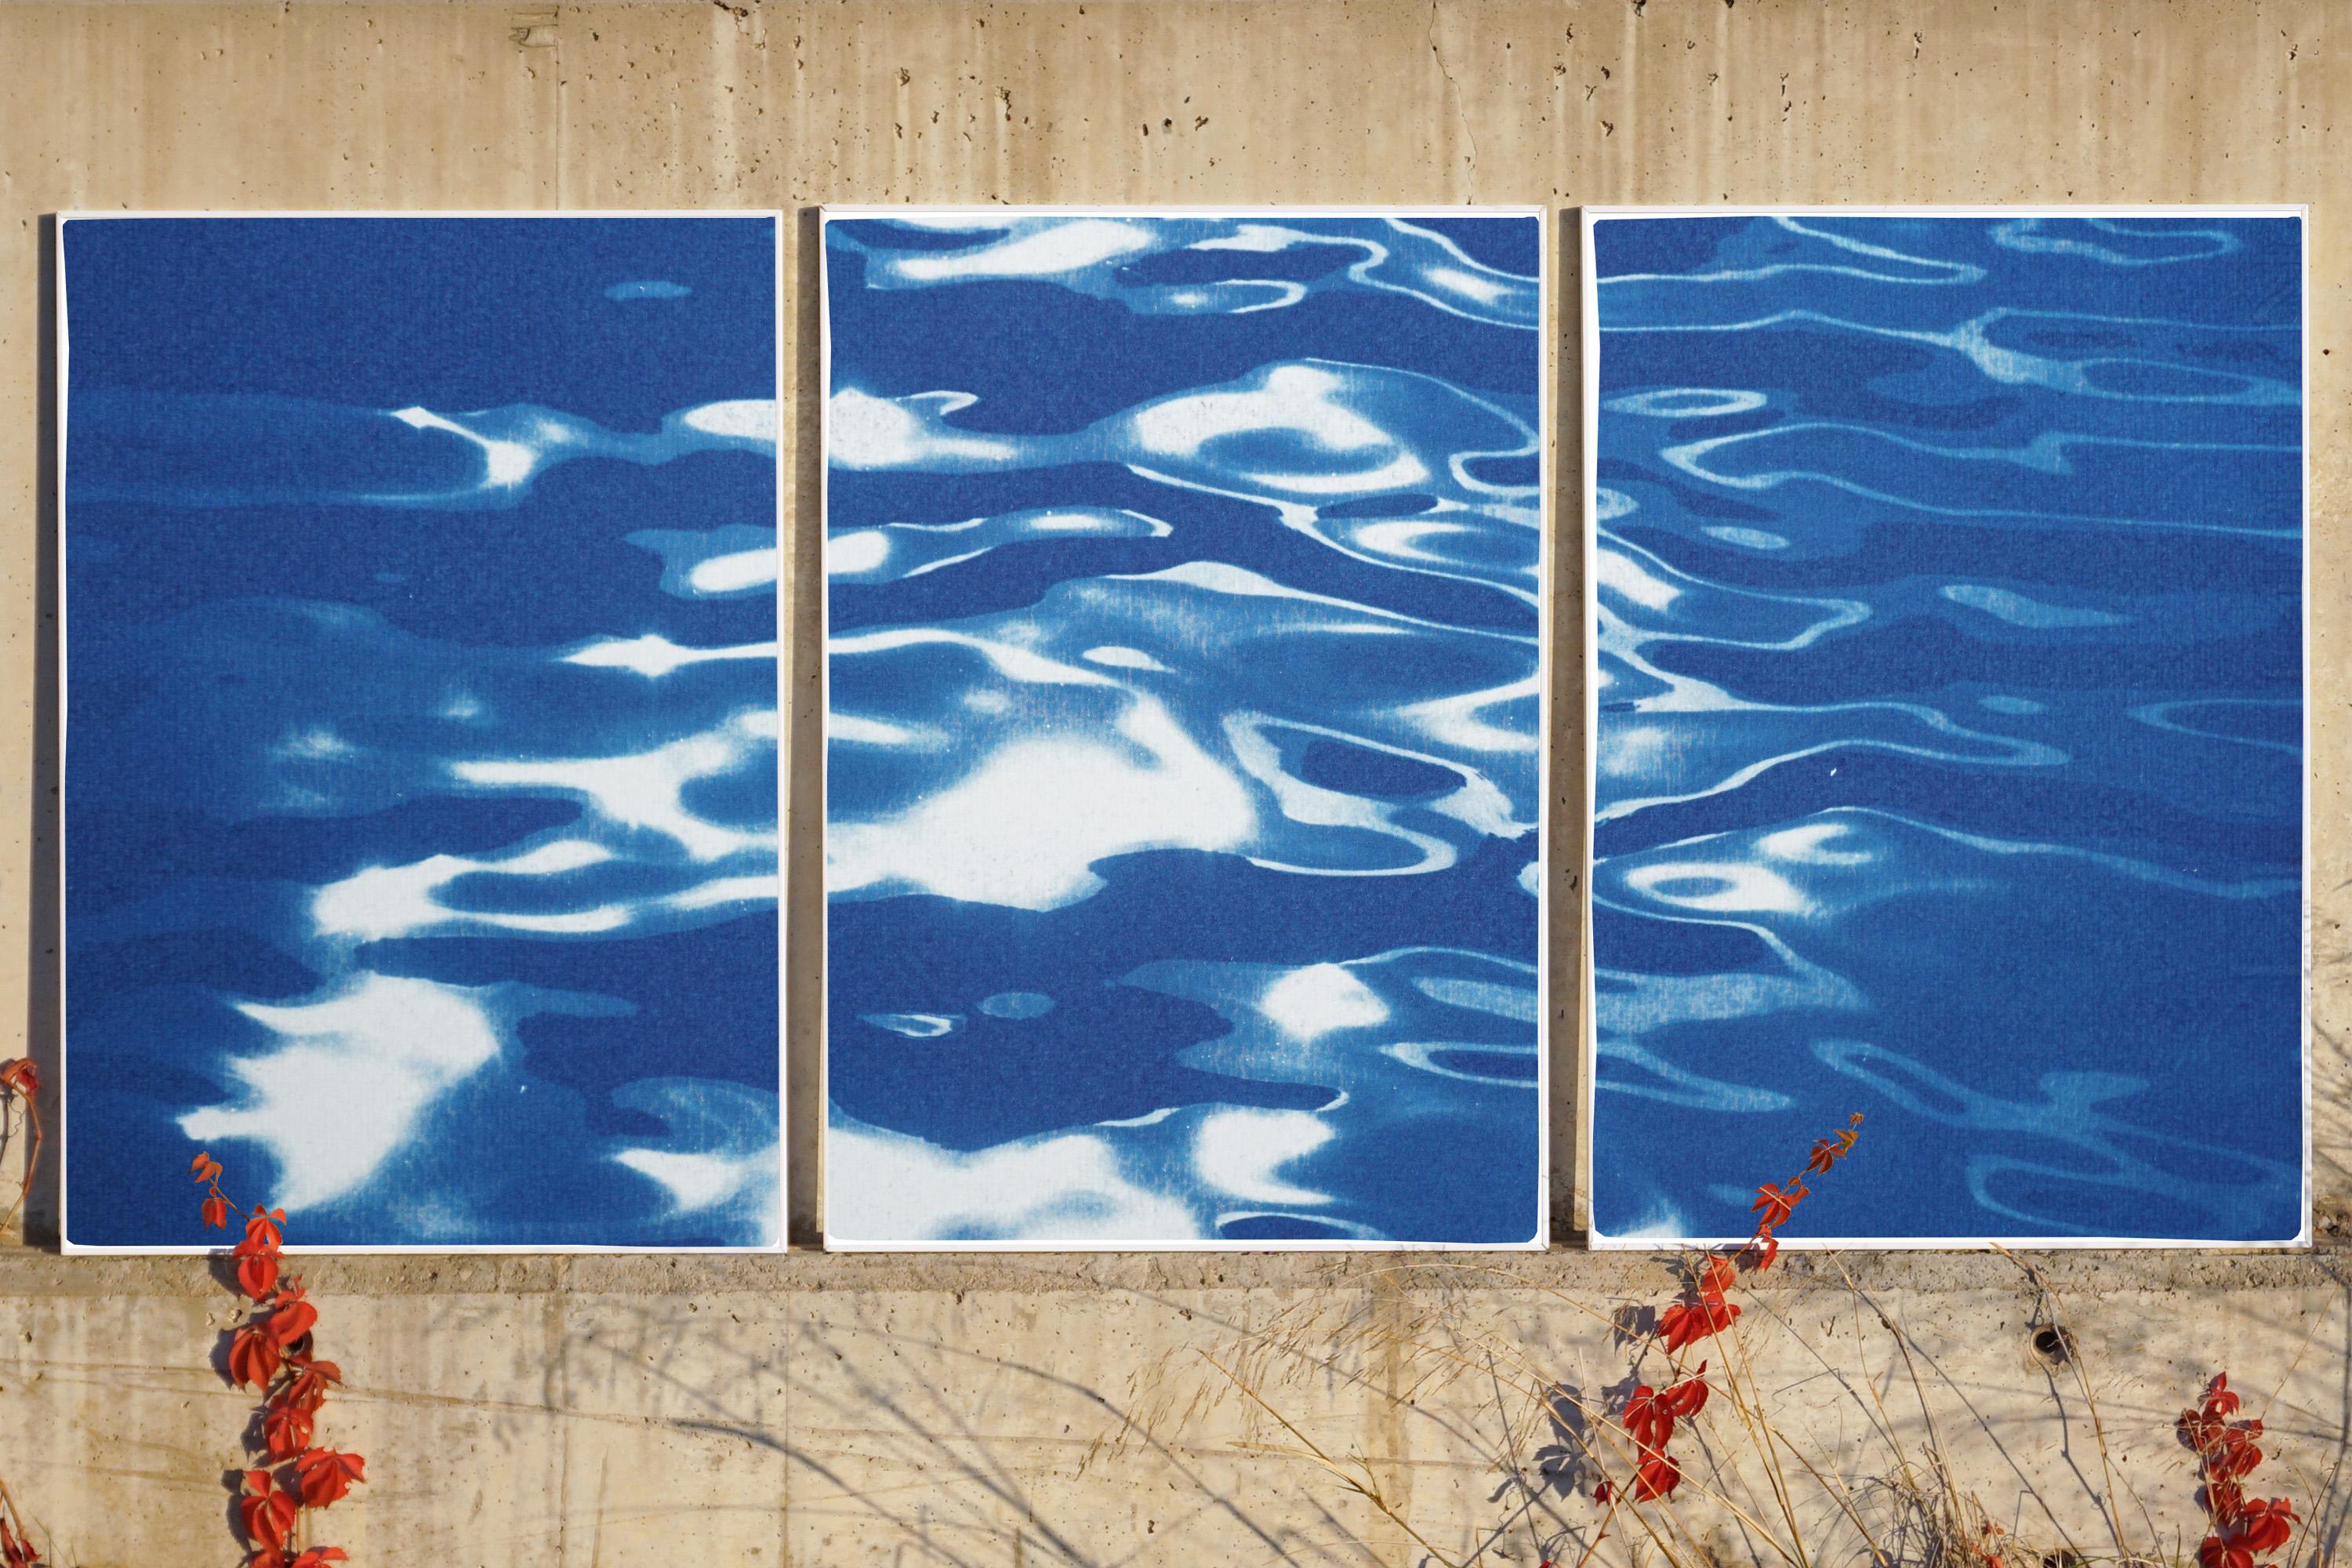 Lido Island Reflections, Venice Landscape Blue Tones, Minimal Cyanotype Print  5